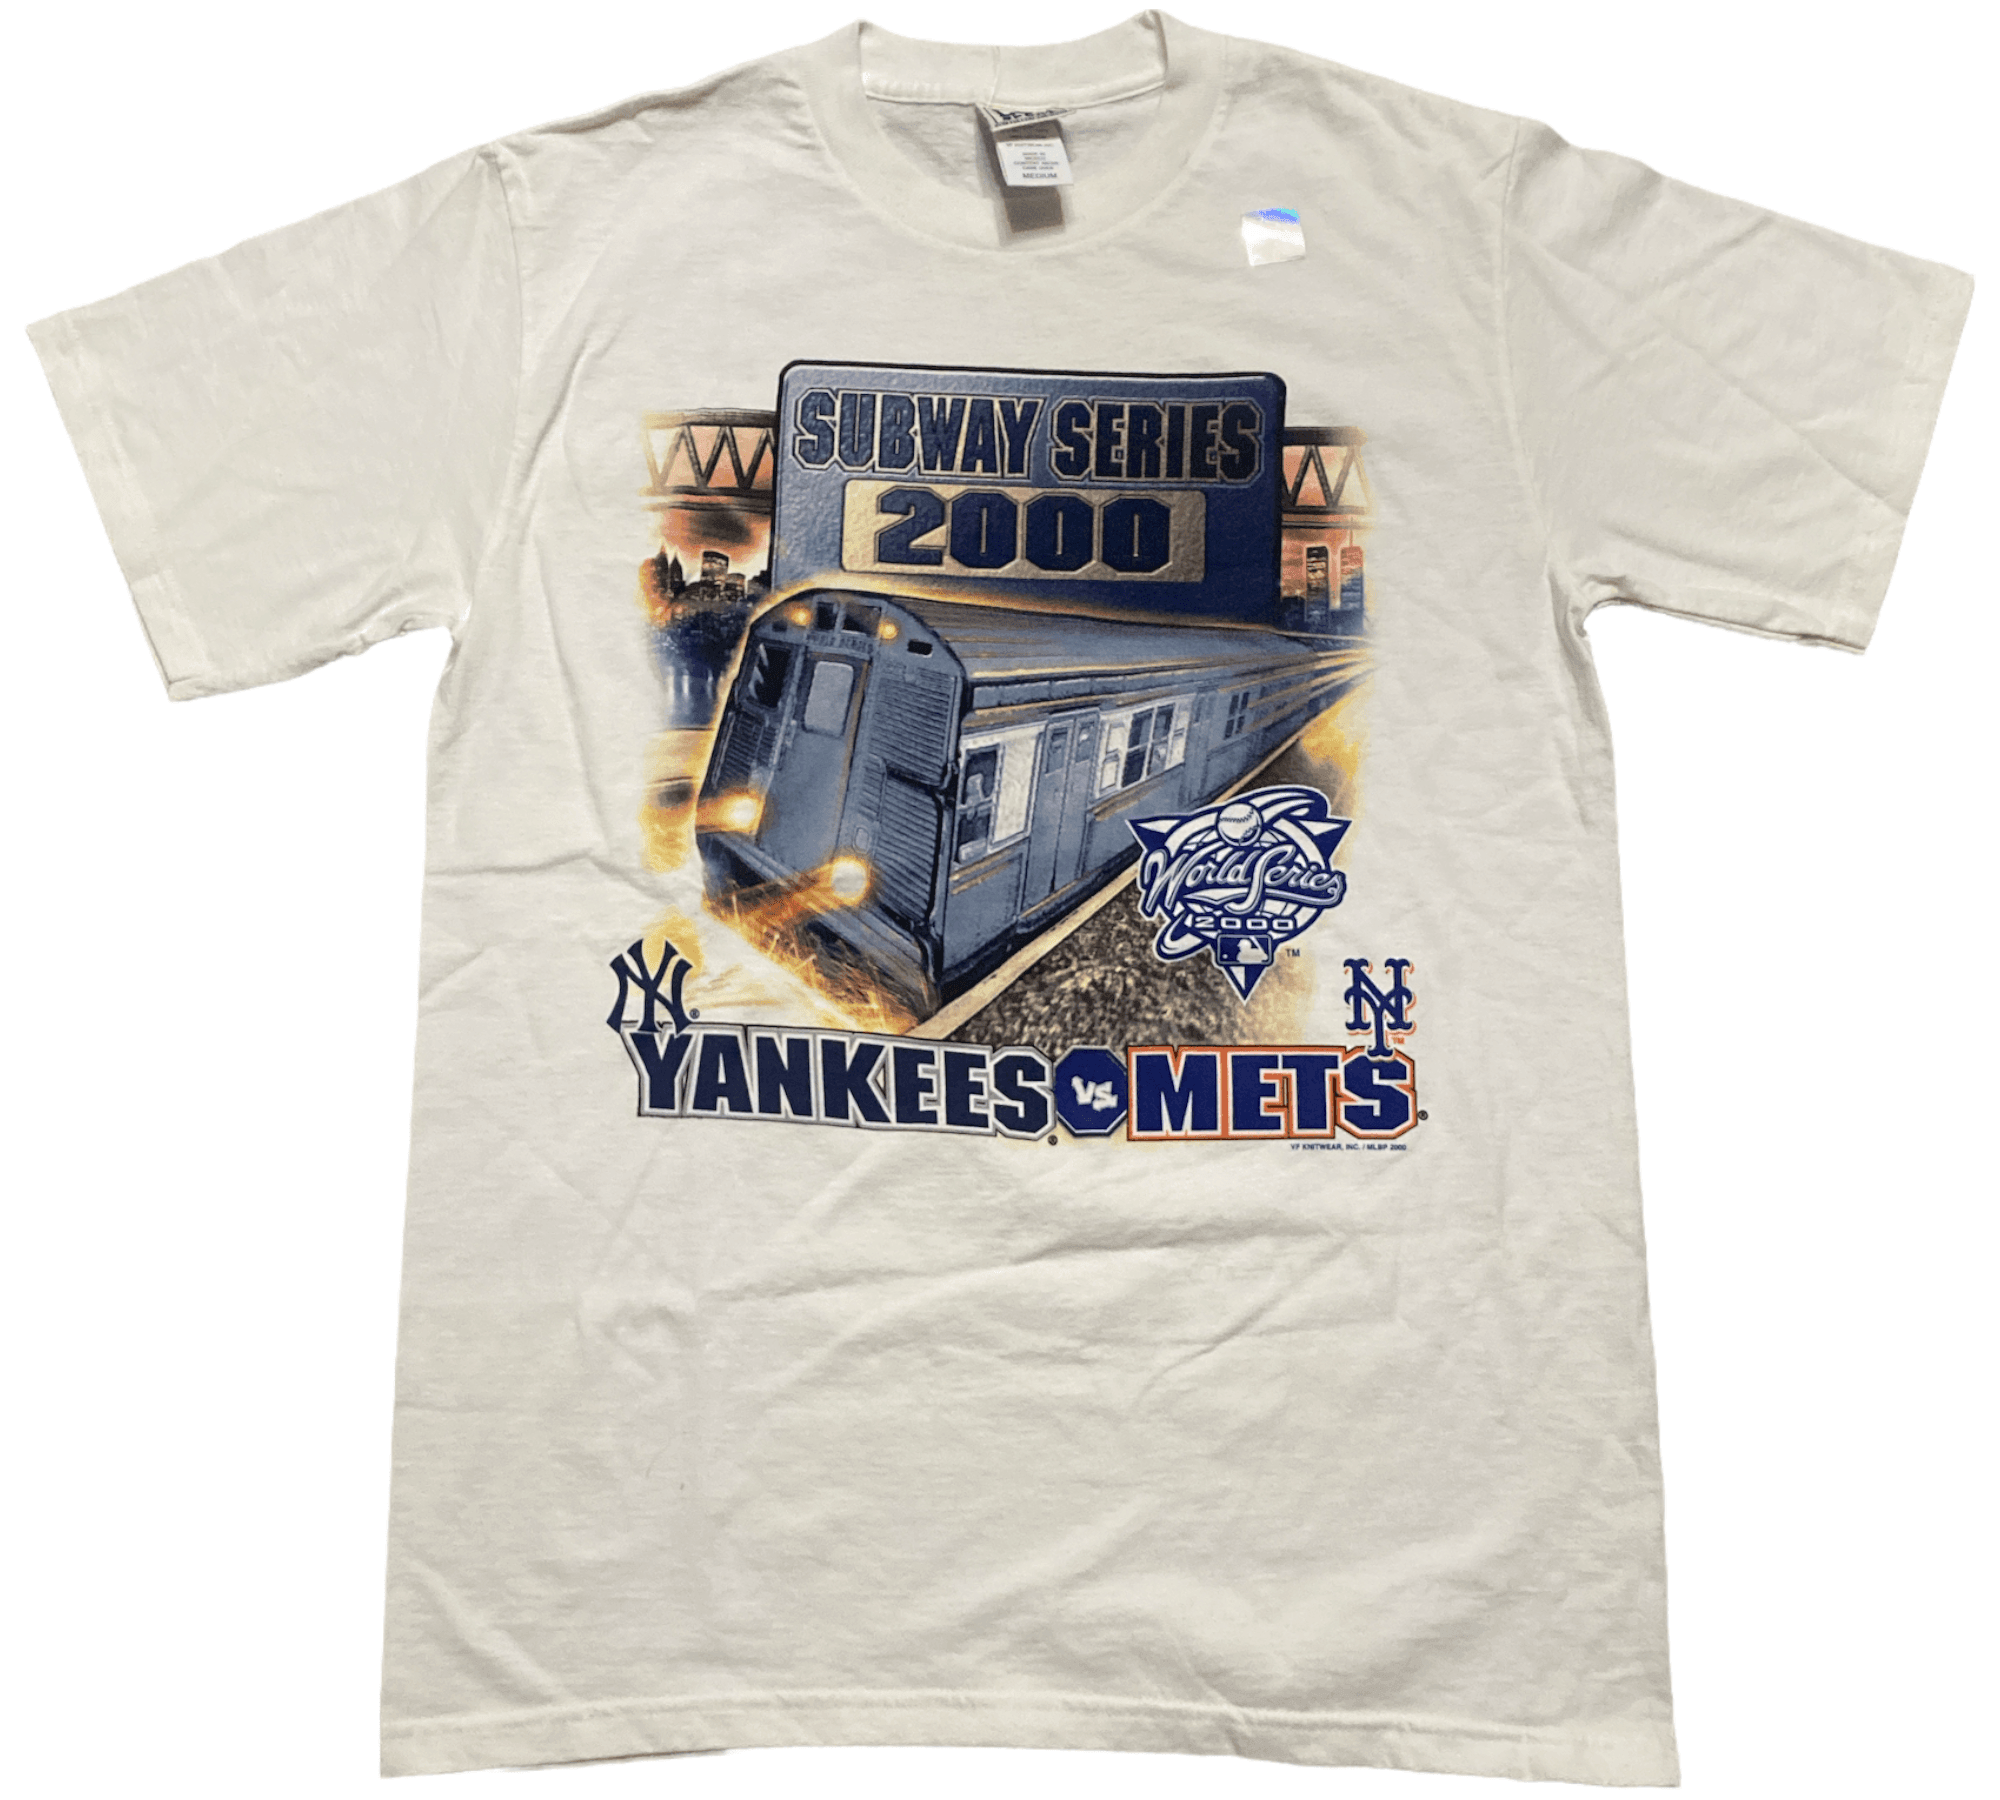 Vintage Deadstock MLB Subway Series New York Yankees Vs Mets 2000 T Shirt